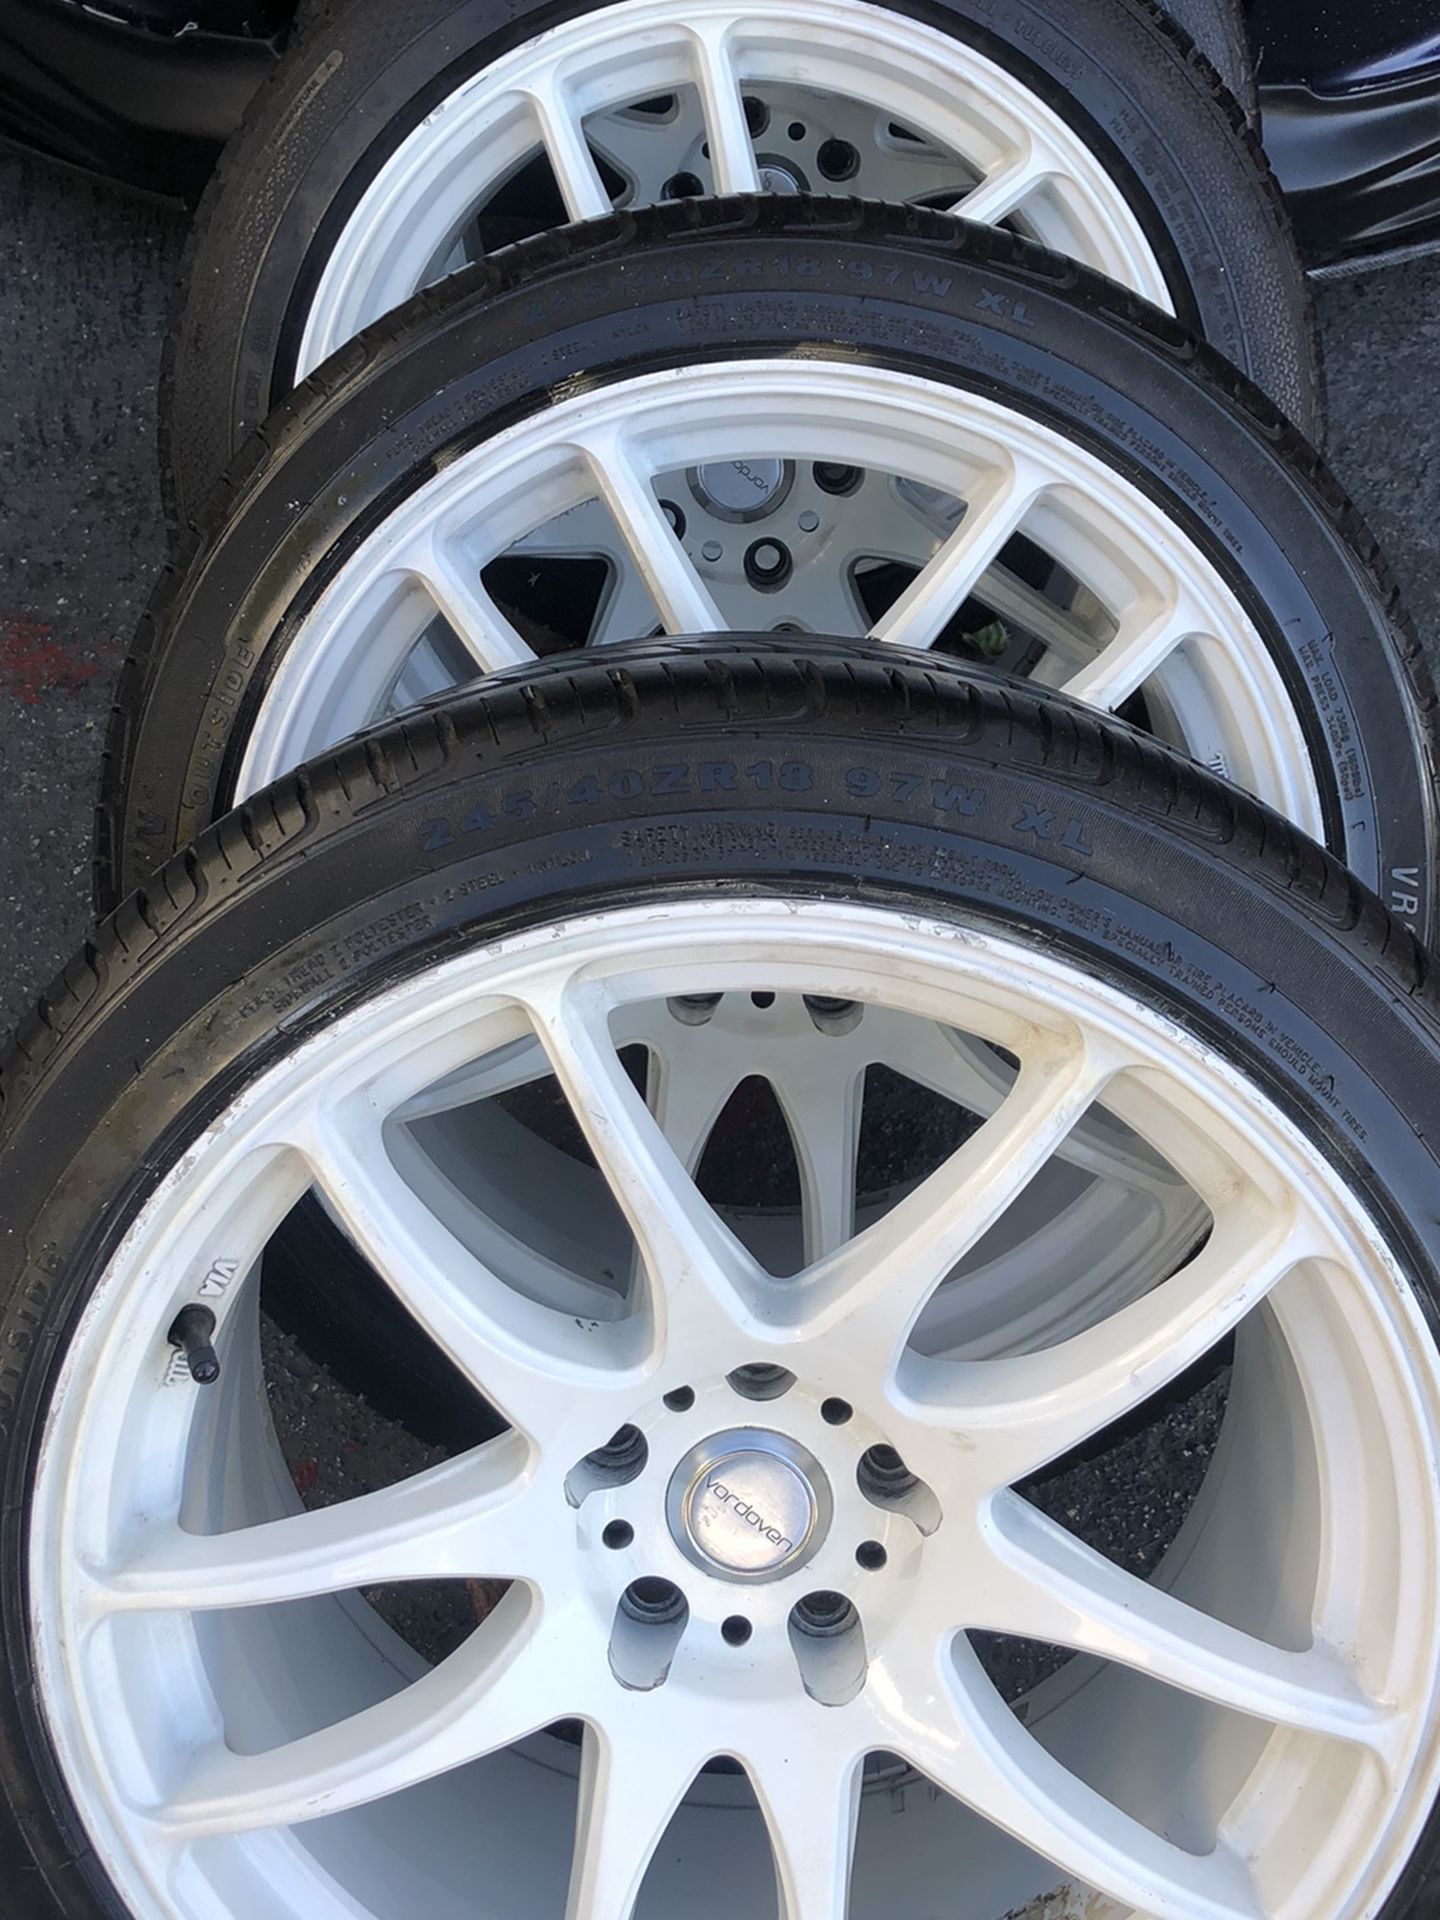 Vordoven Rims Tires 18x9,5 5x114.3 +22 Honda Accord Toyota Camry Nissan Infinity